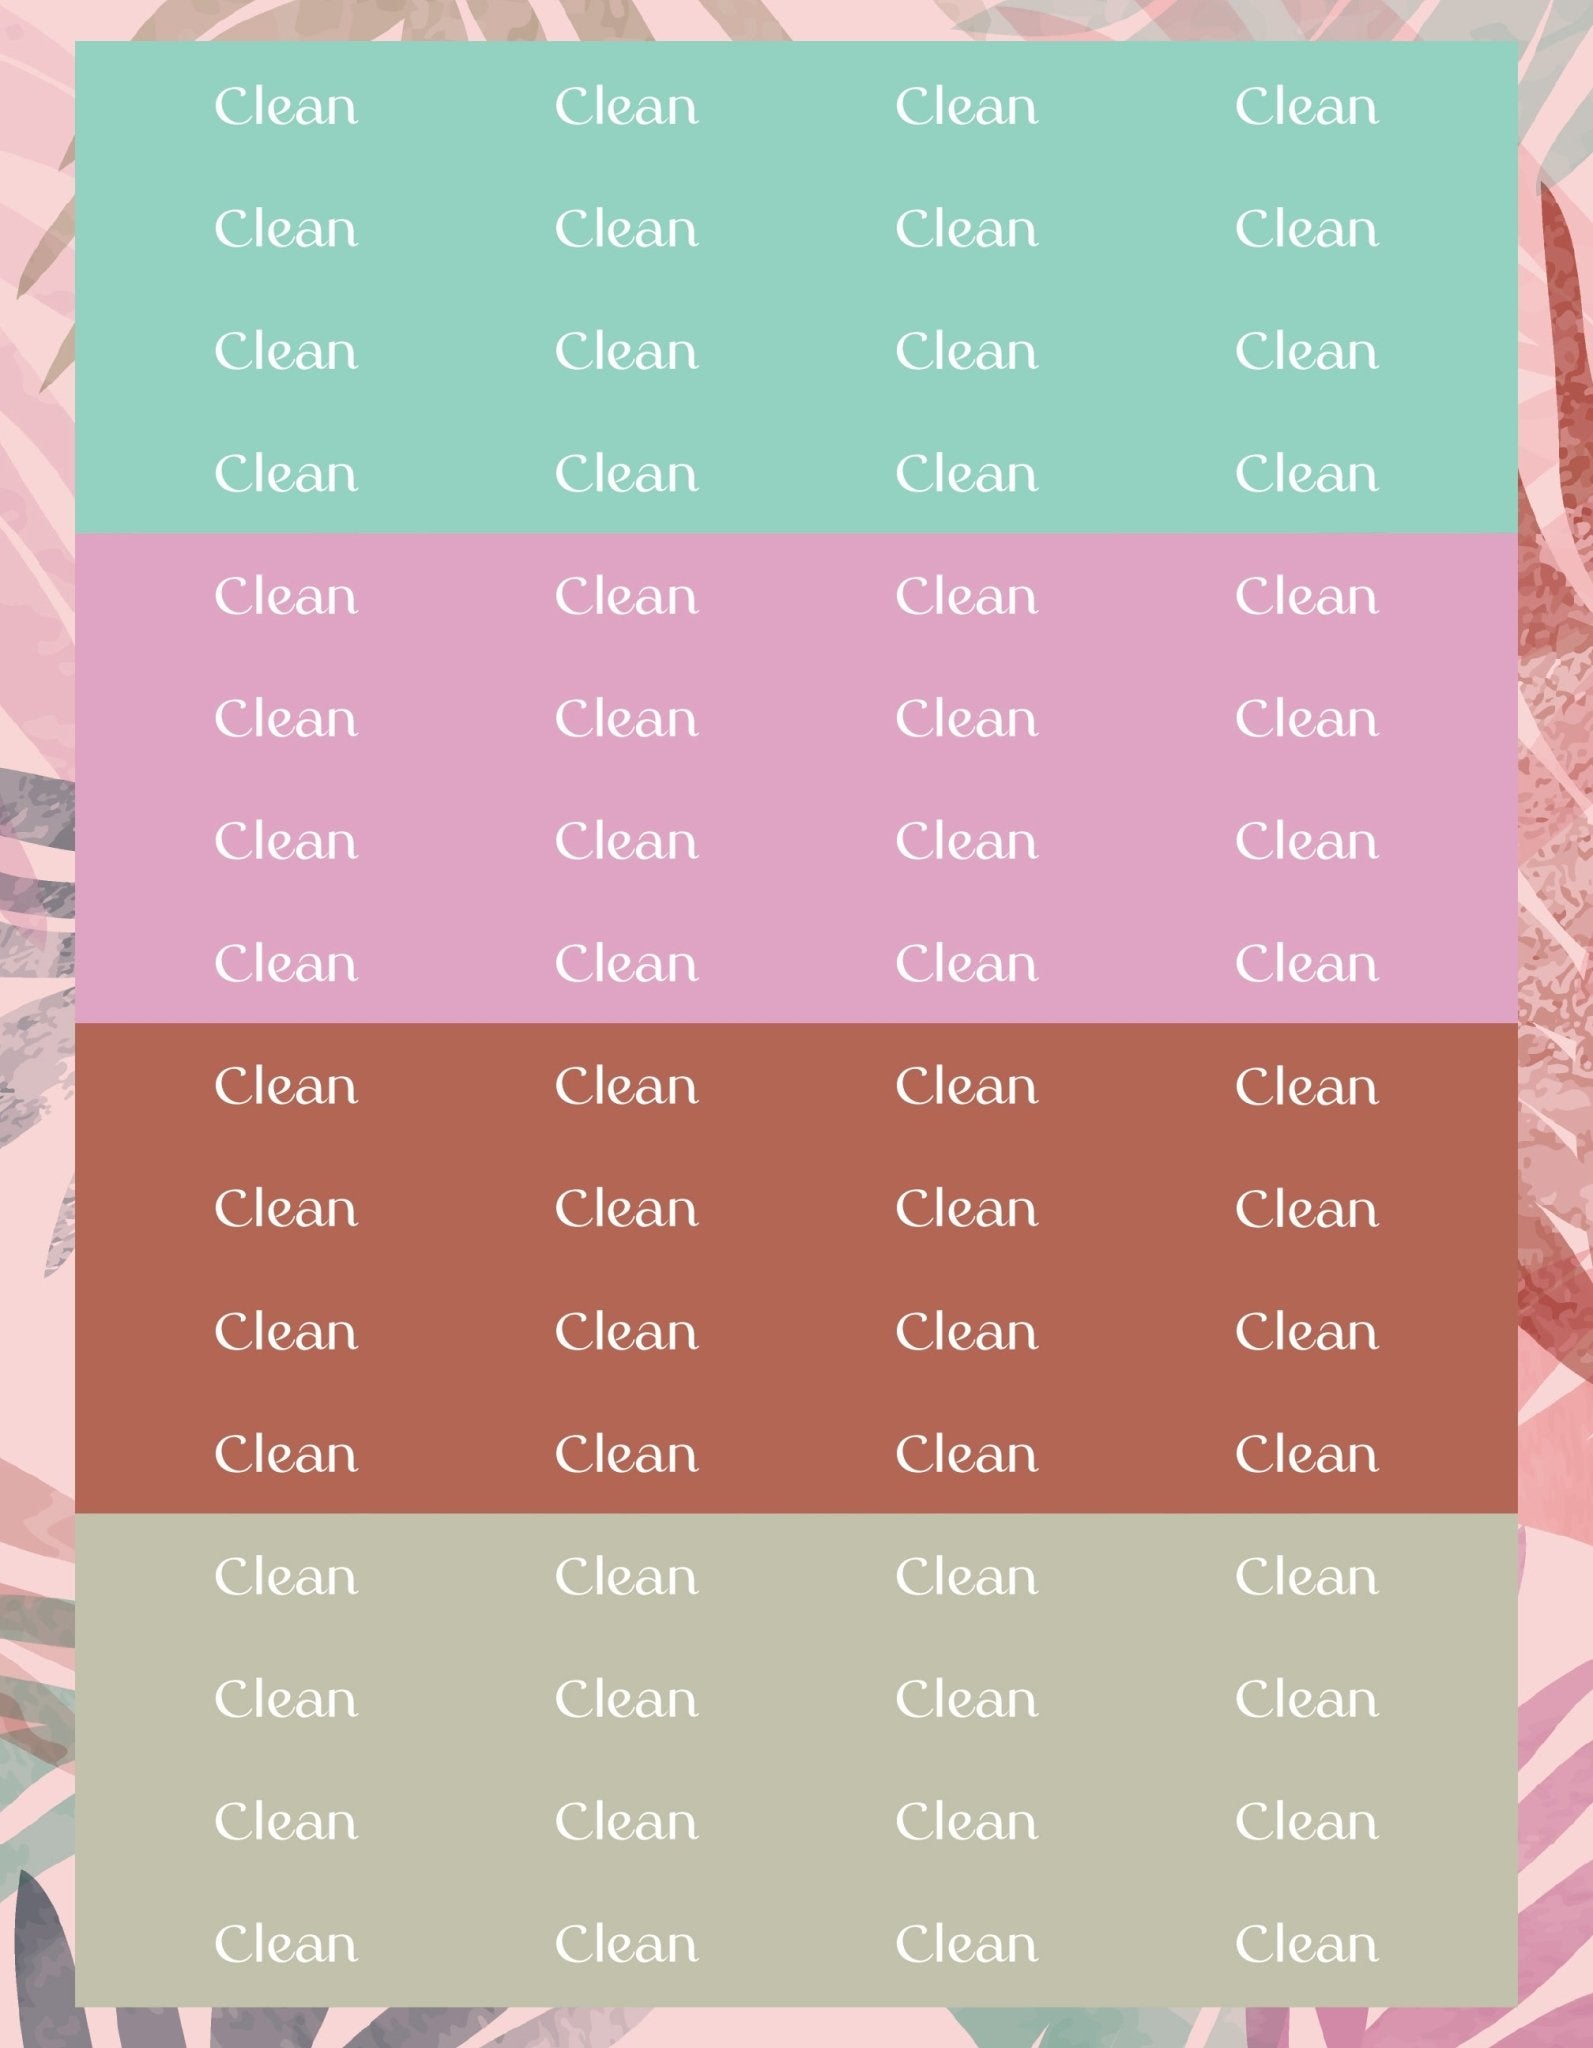 Clean Sticker Sheets - 9 Designs/Colors - Colibri Paper Co